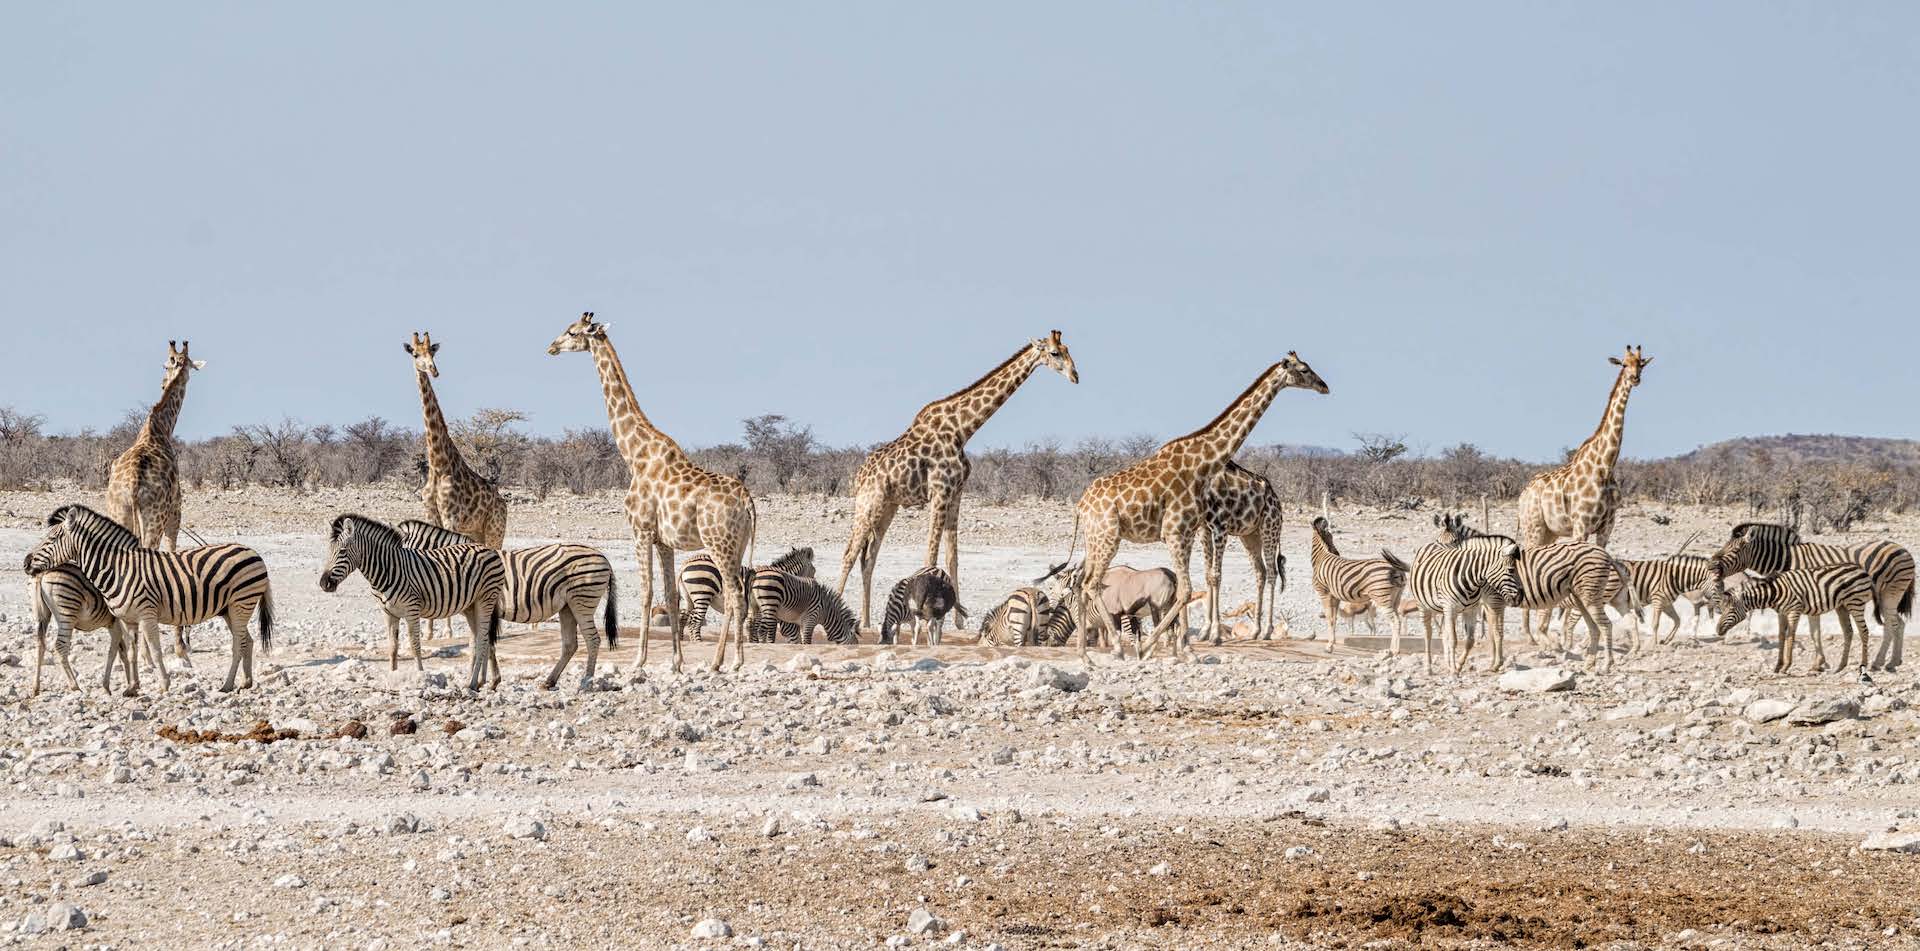 Giraffes on safari